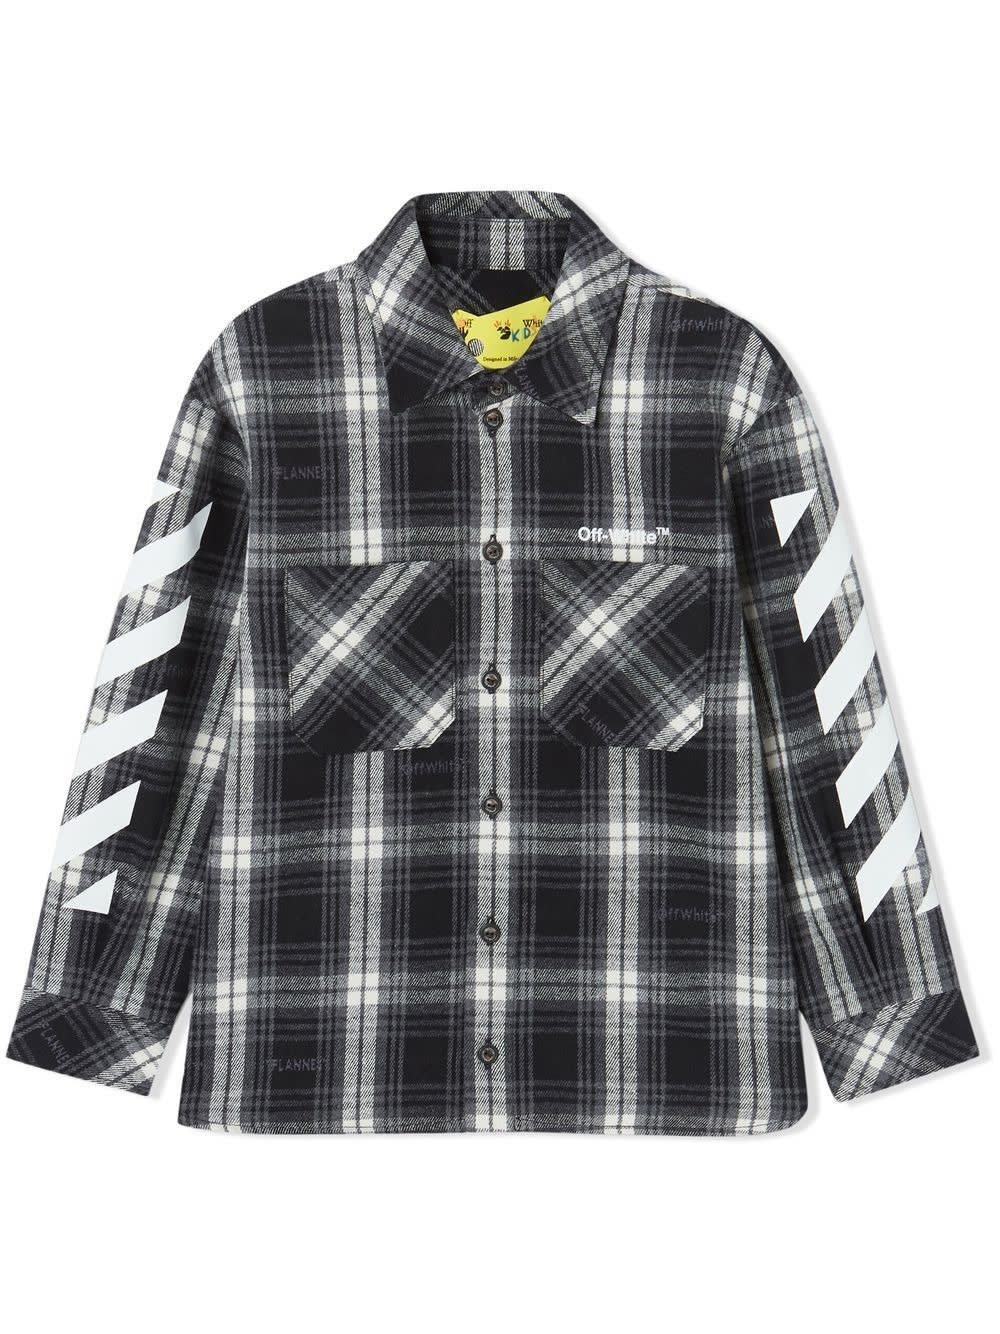 Off-White Black Helvetica Diag Check Flannel Shirt